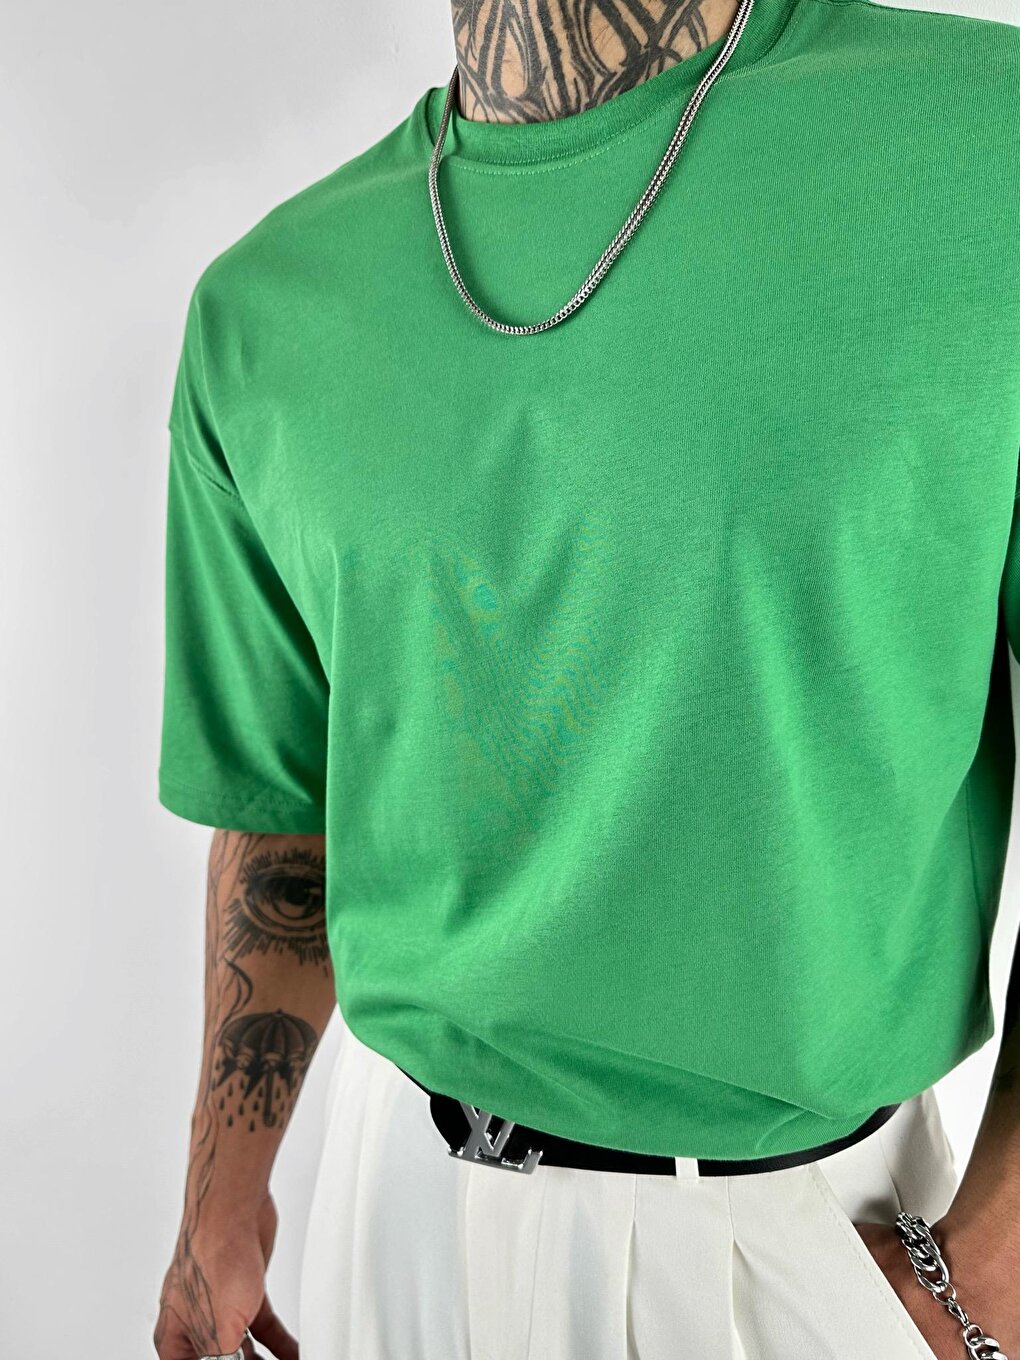 Базовая футболка Oversize Зеленая ablukaonline цена и фото